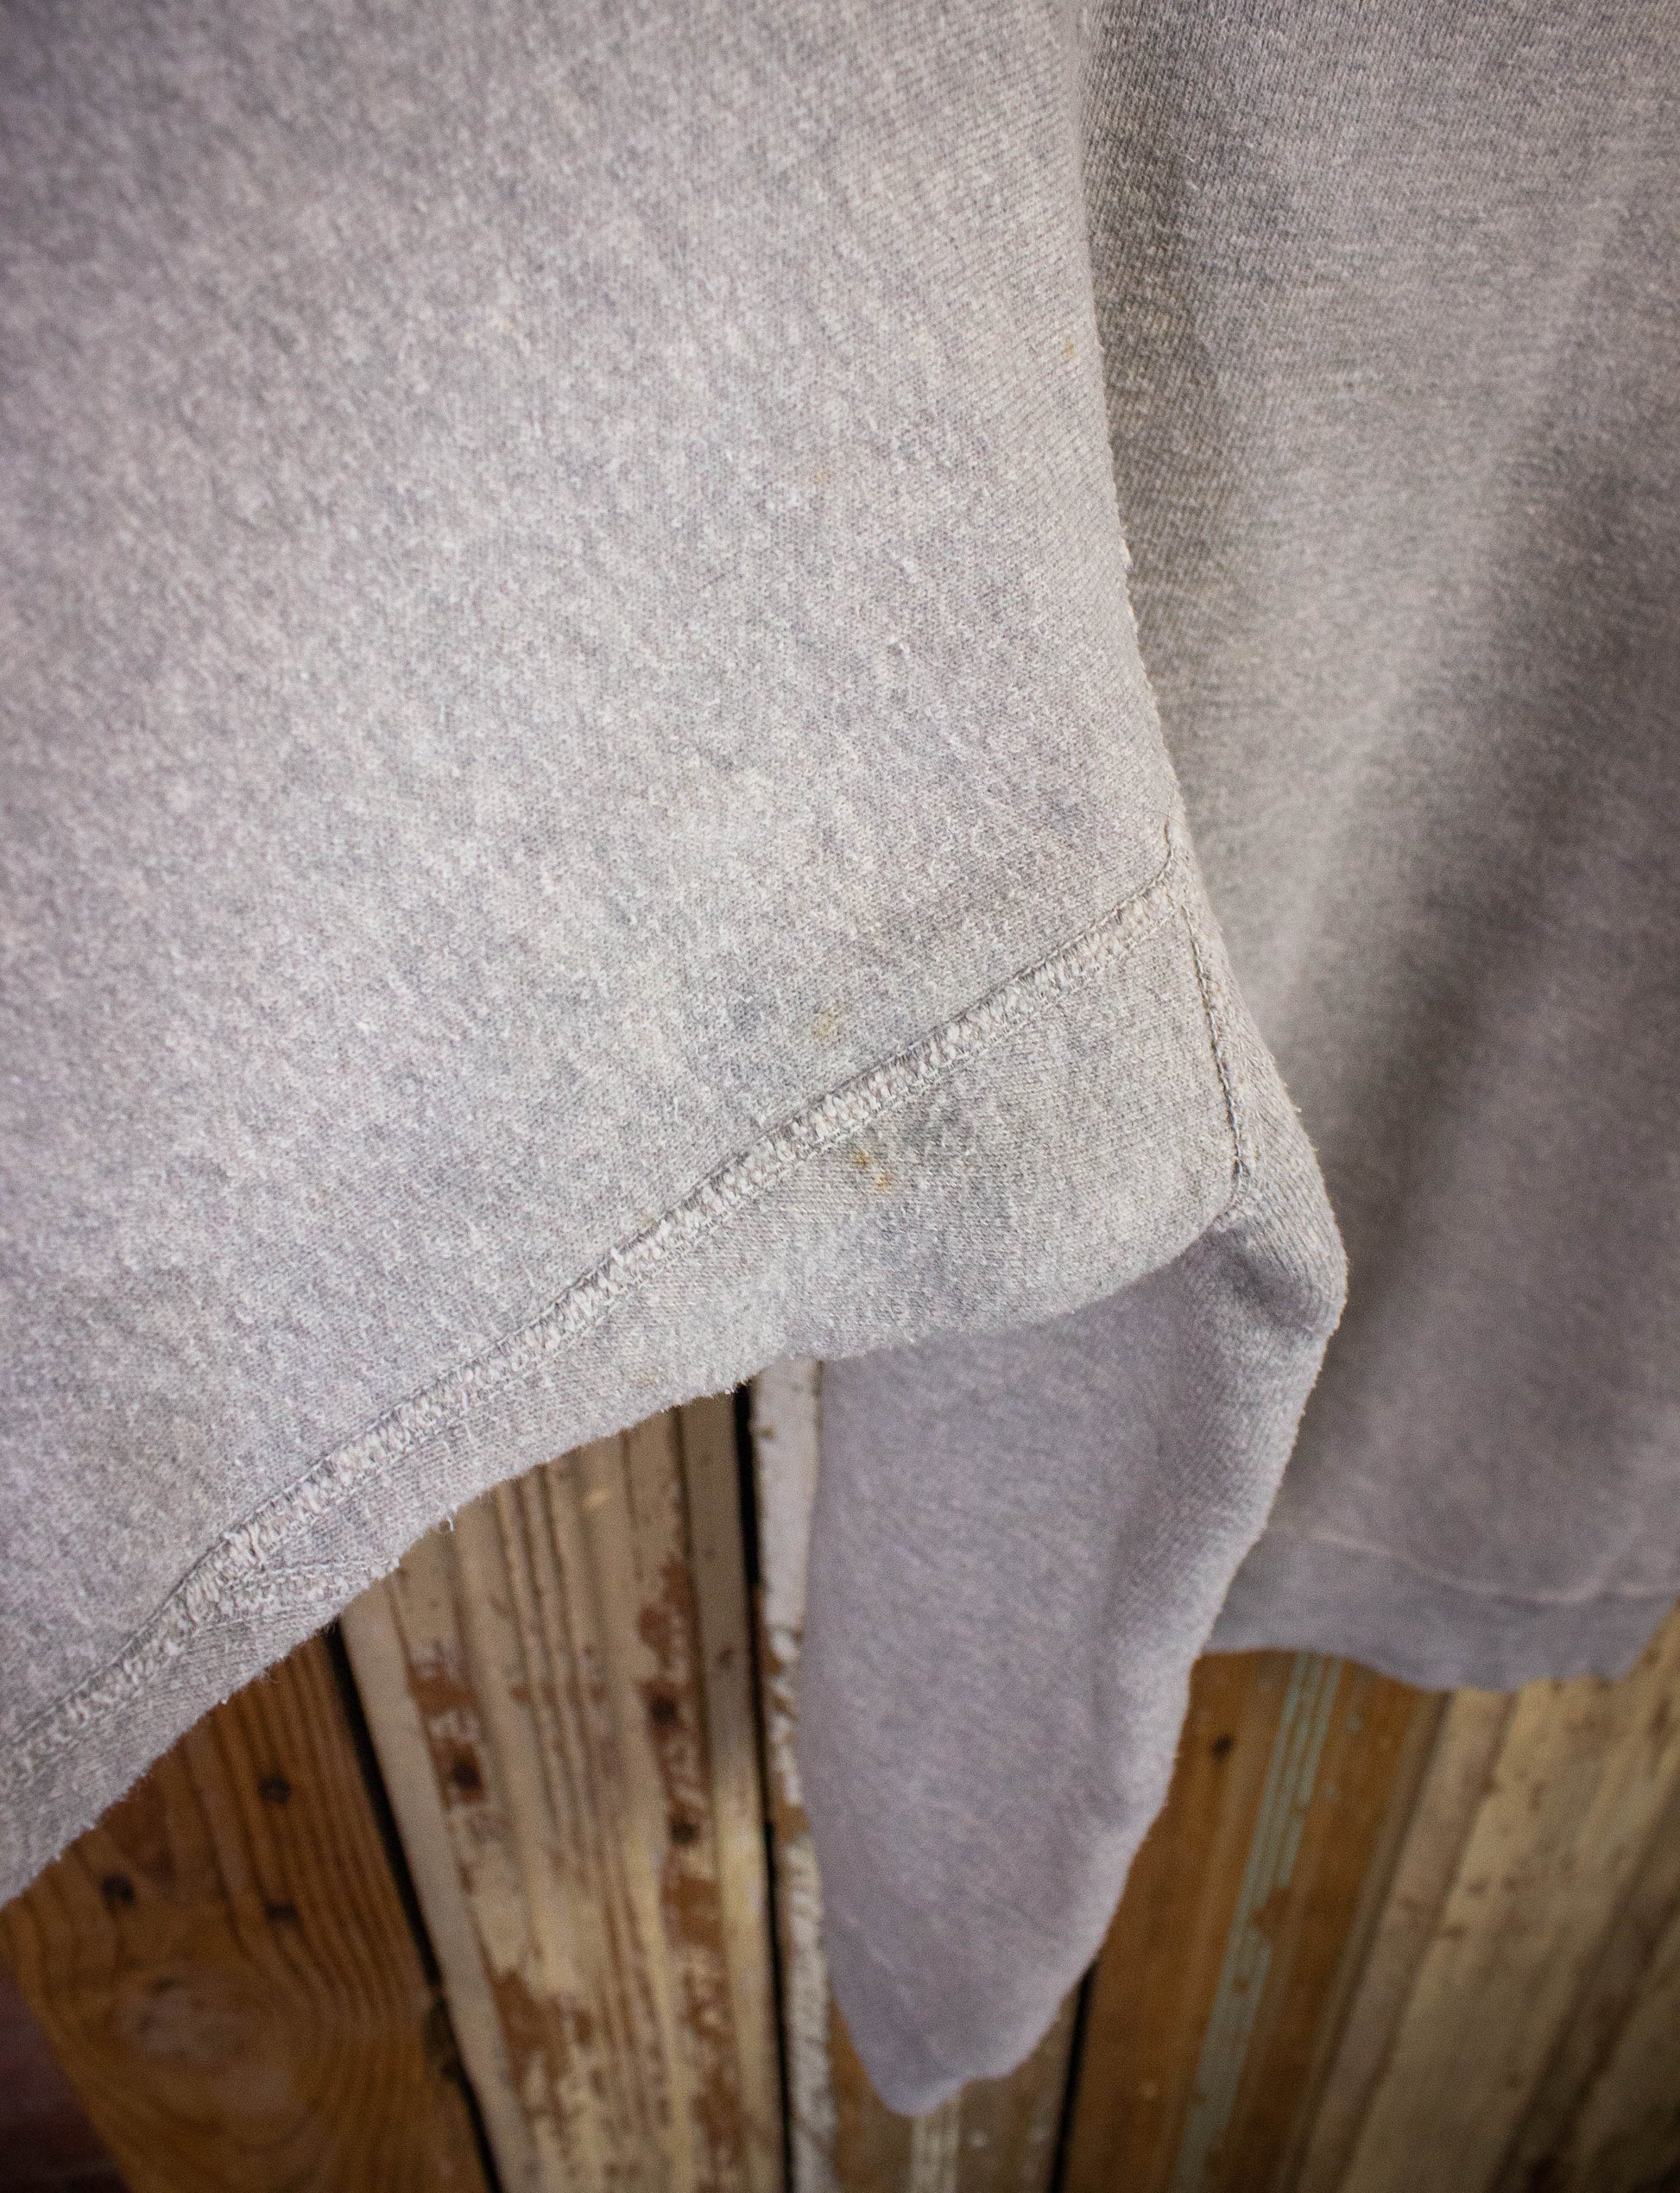 Vintage Blank Gray Crewneck Sweatshirt Small